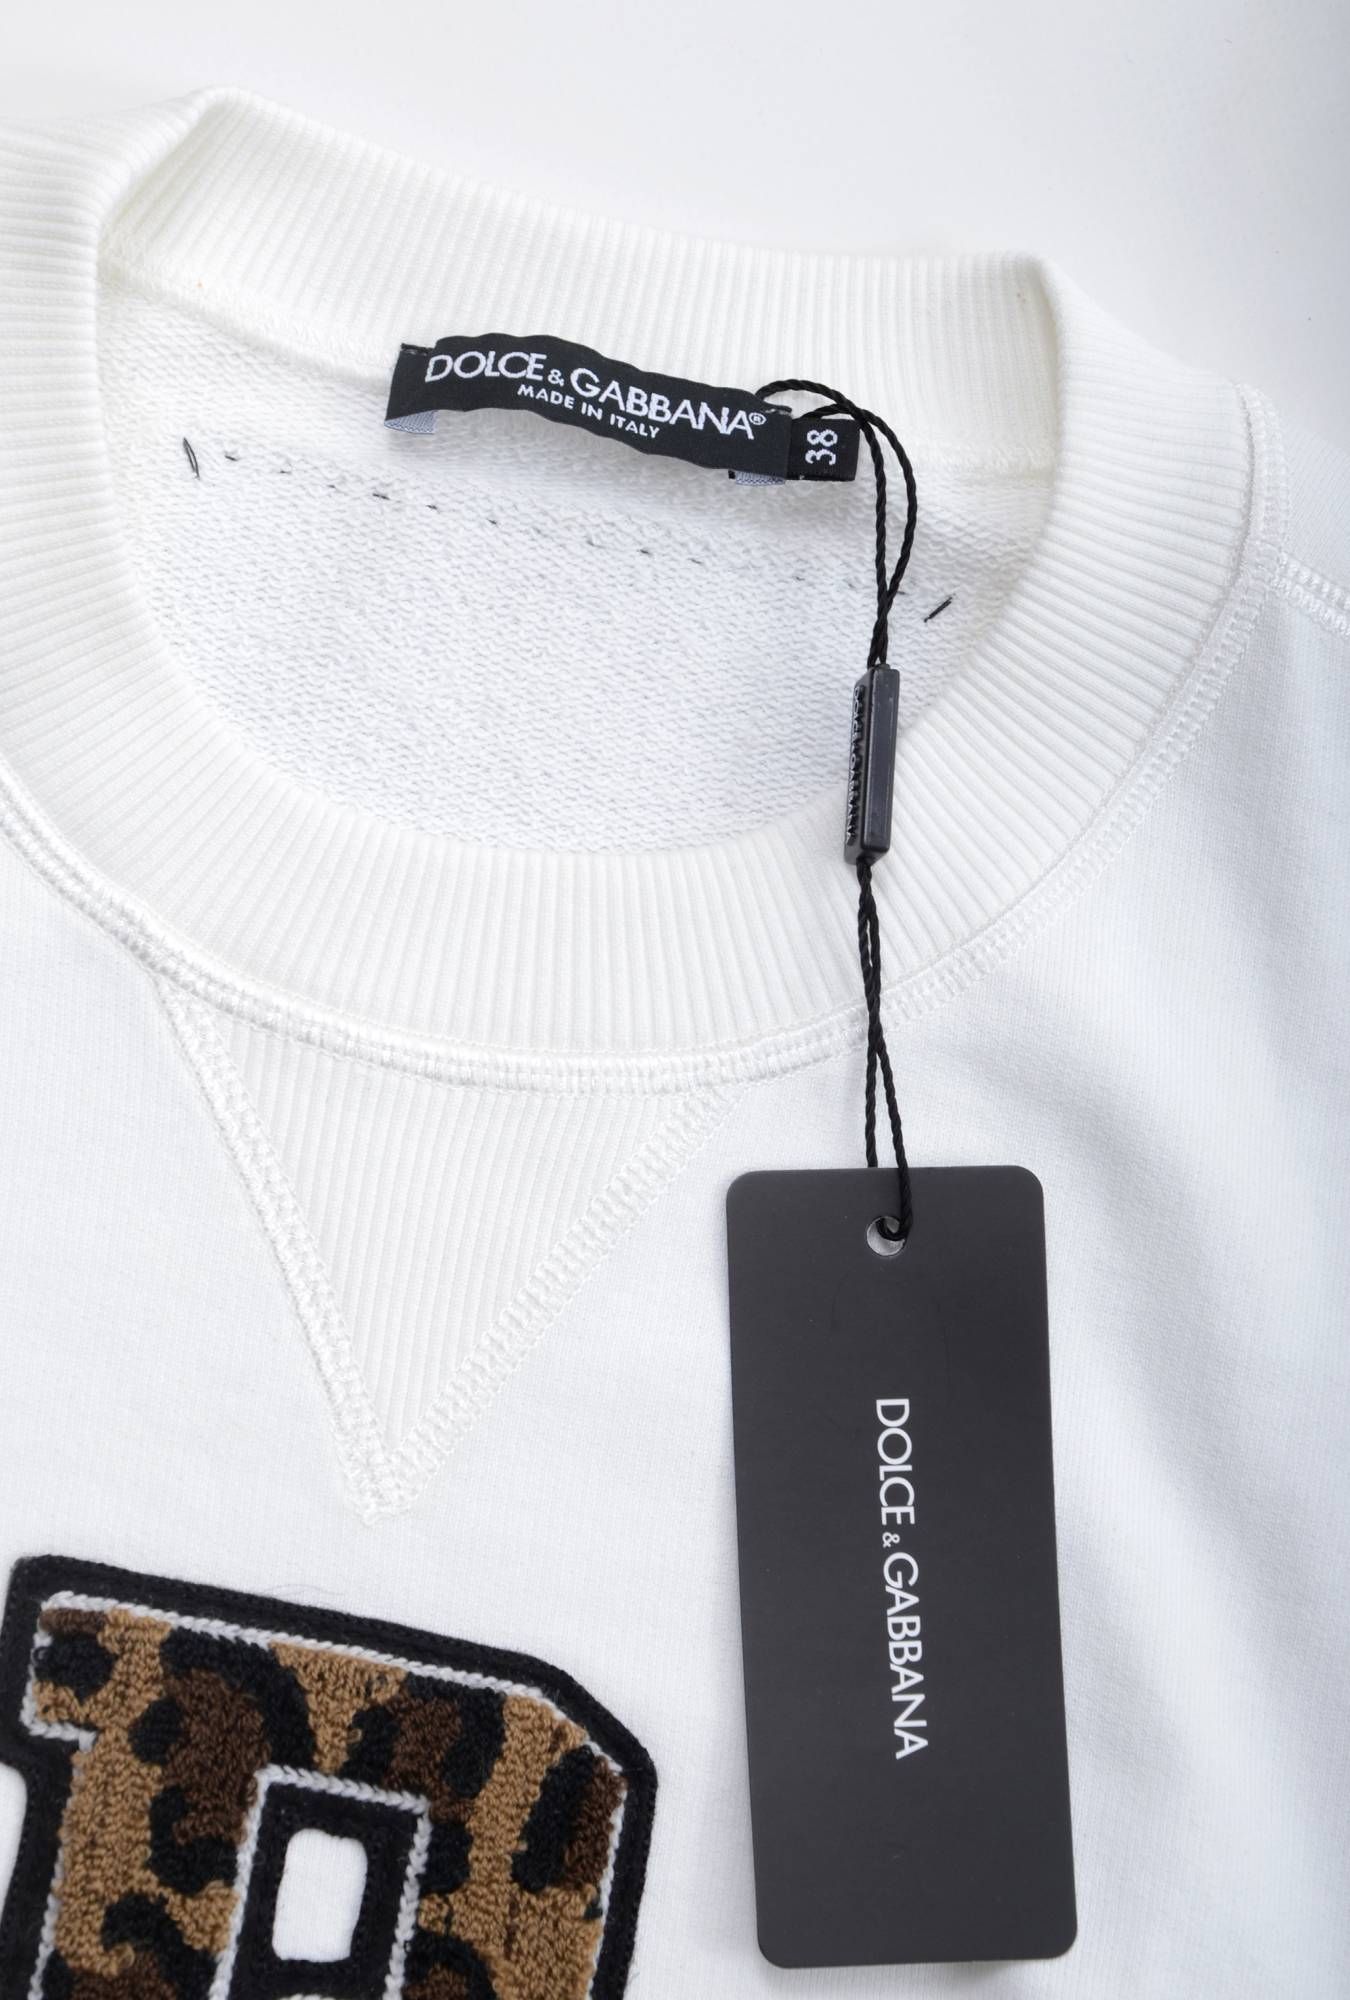 Round Neck
Sleeveless
Dolce & Gabbana Logo And Patch
Elastic Neck And Hem